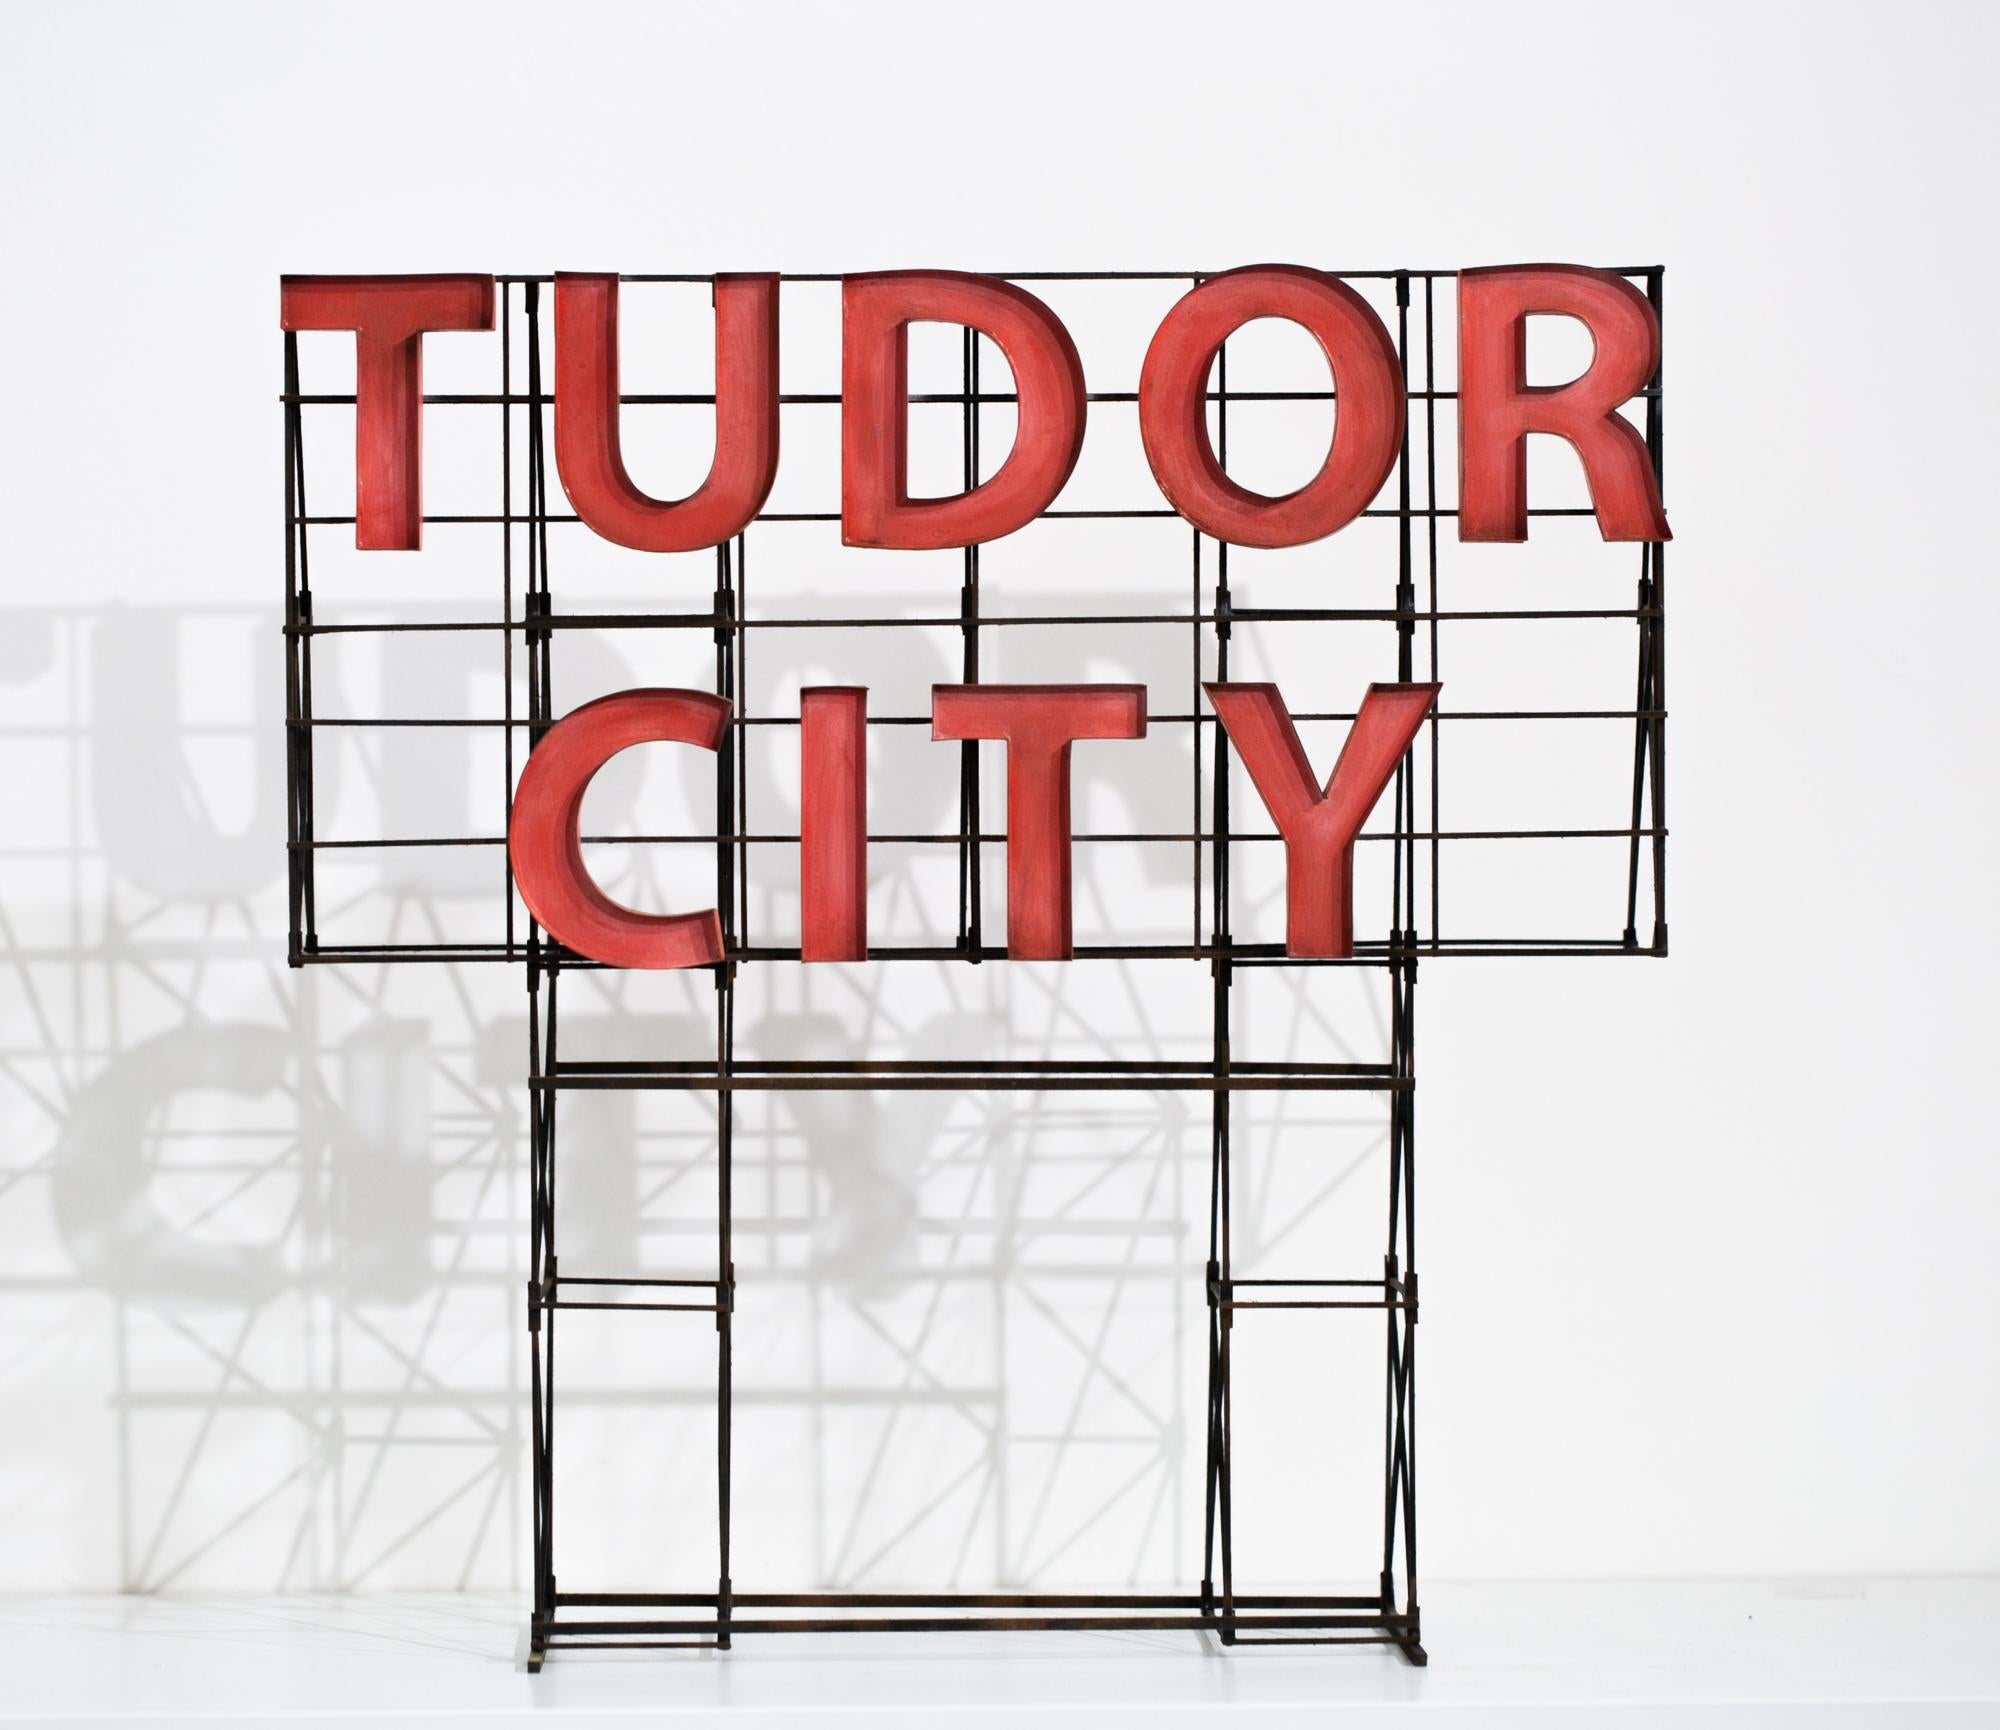 Drew Leshko Still-Life Sculpture - "Tudor City", Miniature, Architecture, Sign, Cityscape, Sculpture